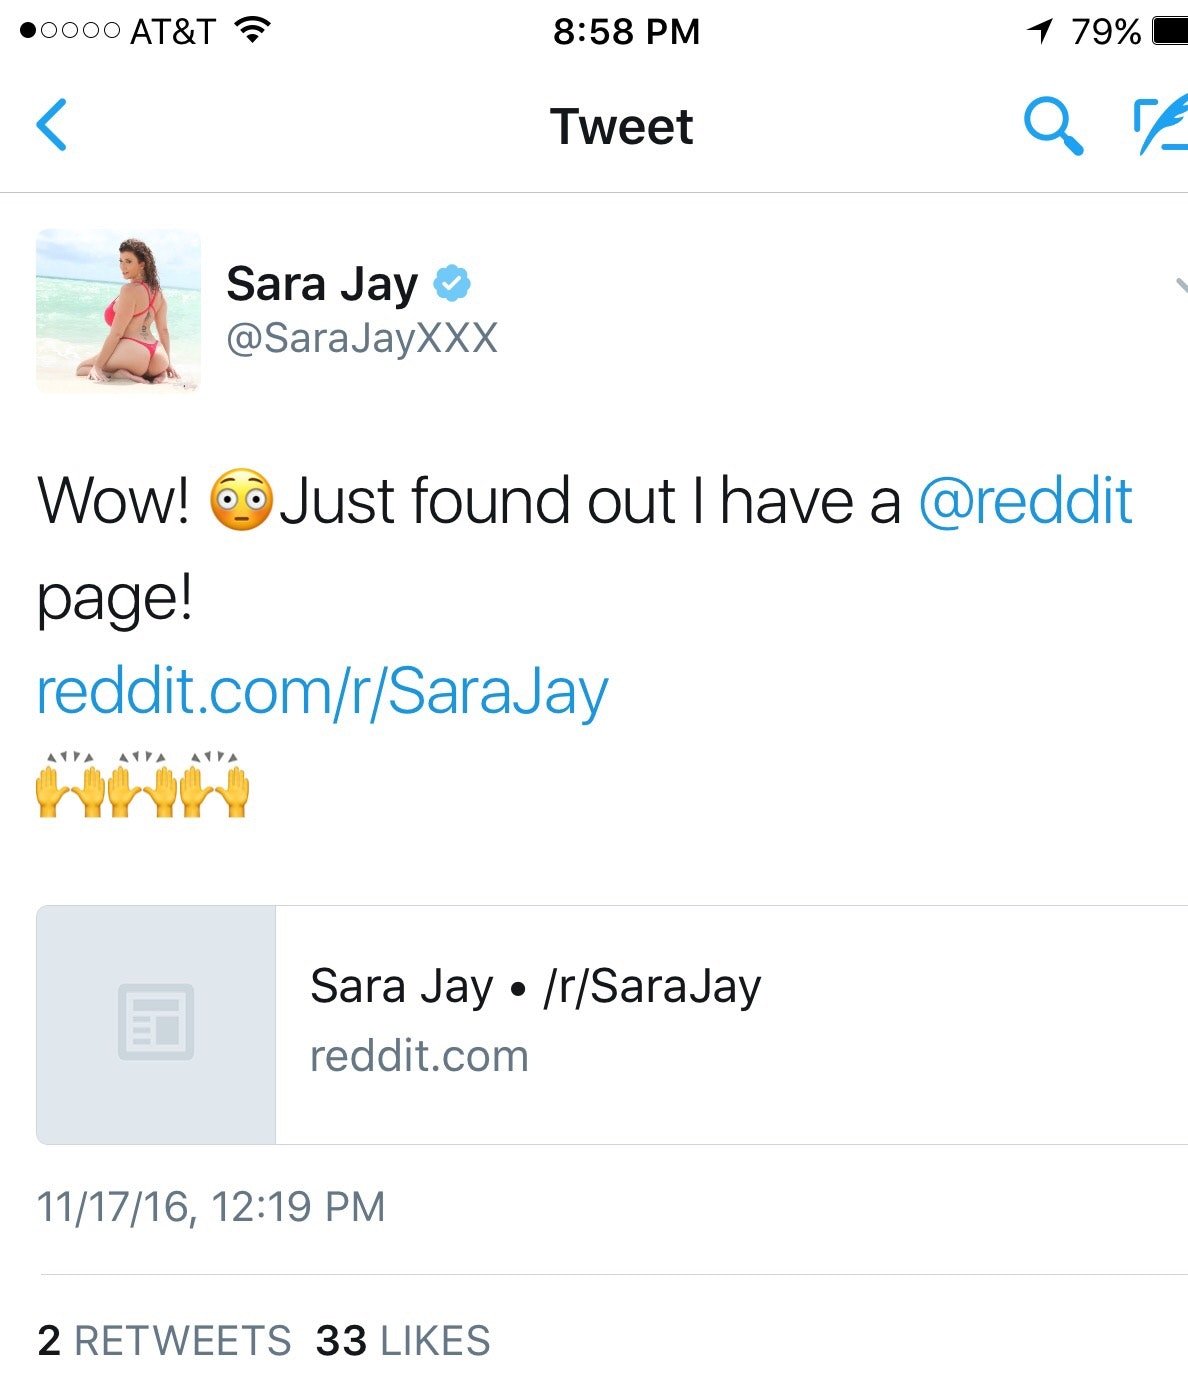 So Sara Jay just acknowledged us.